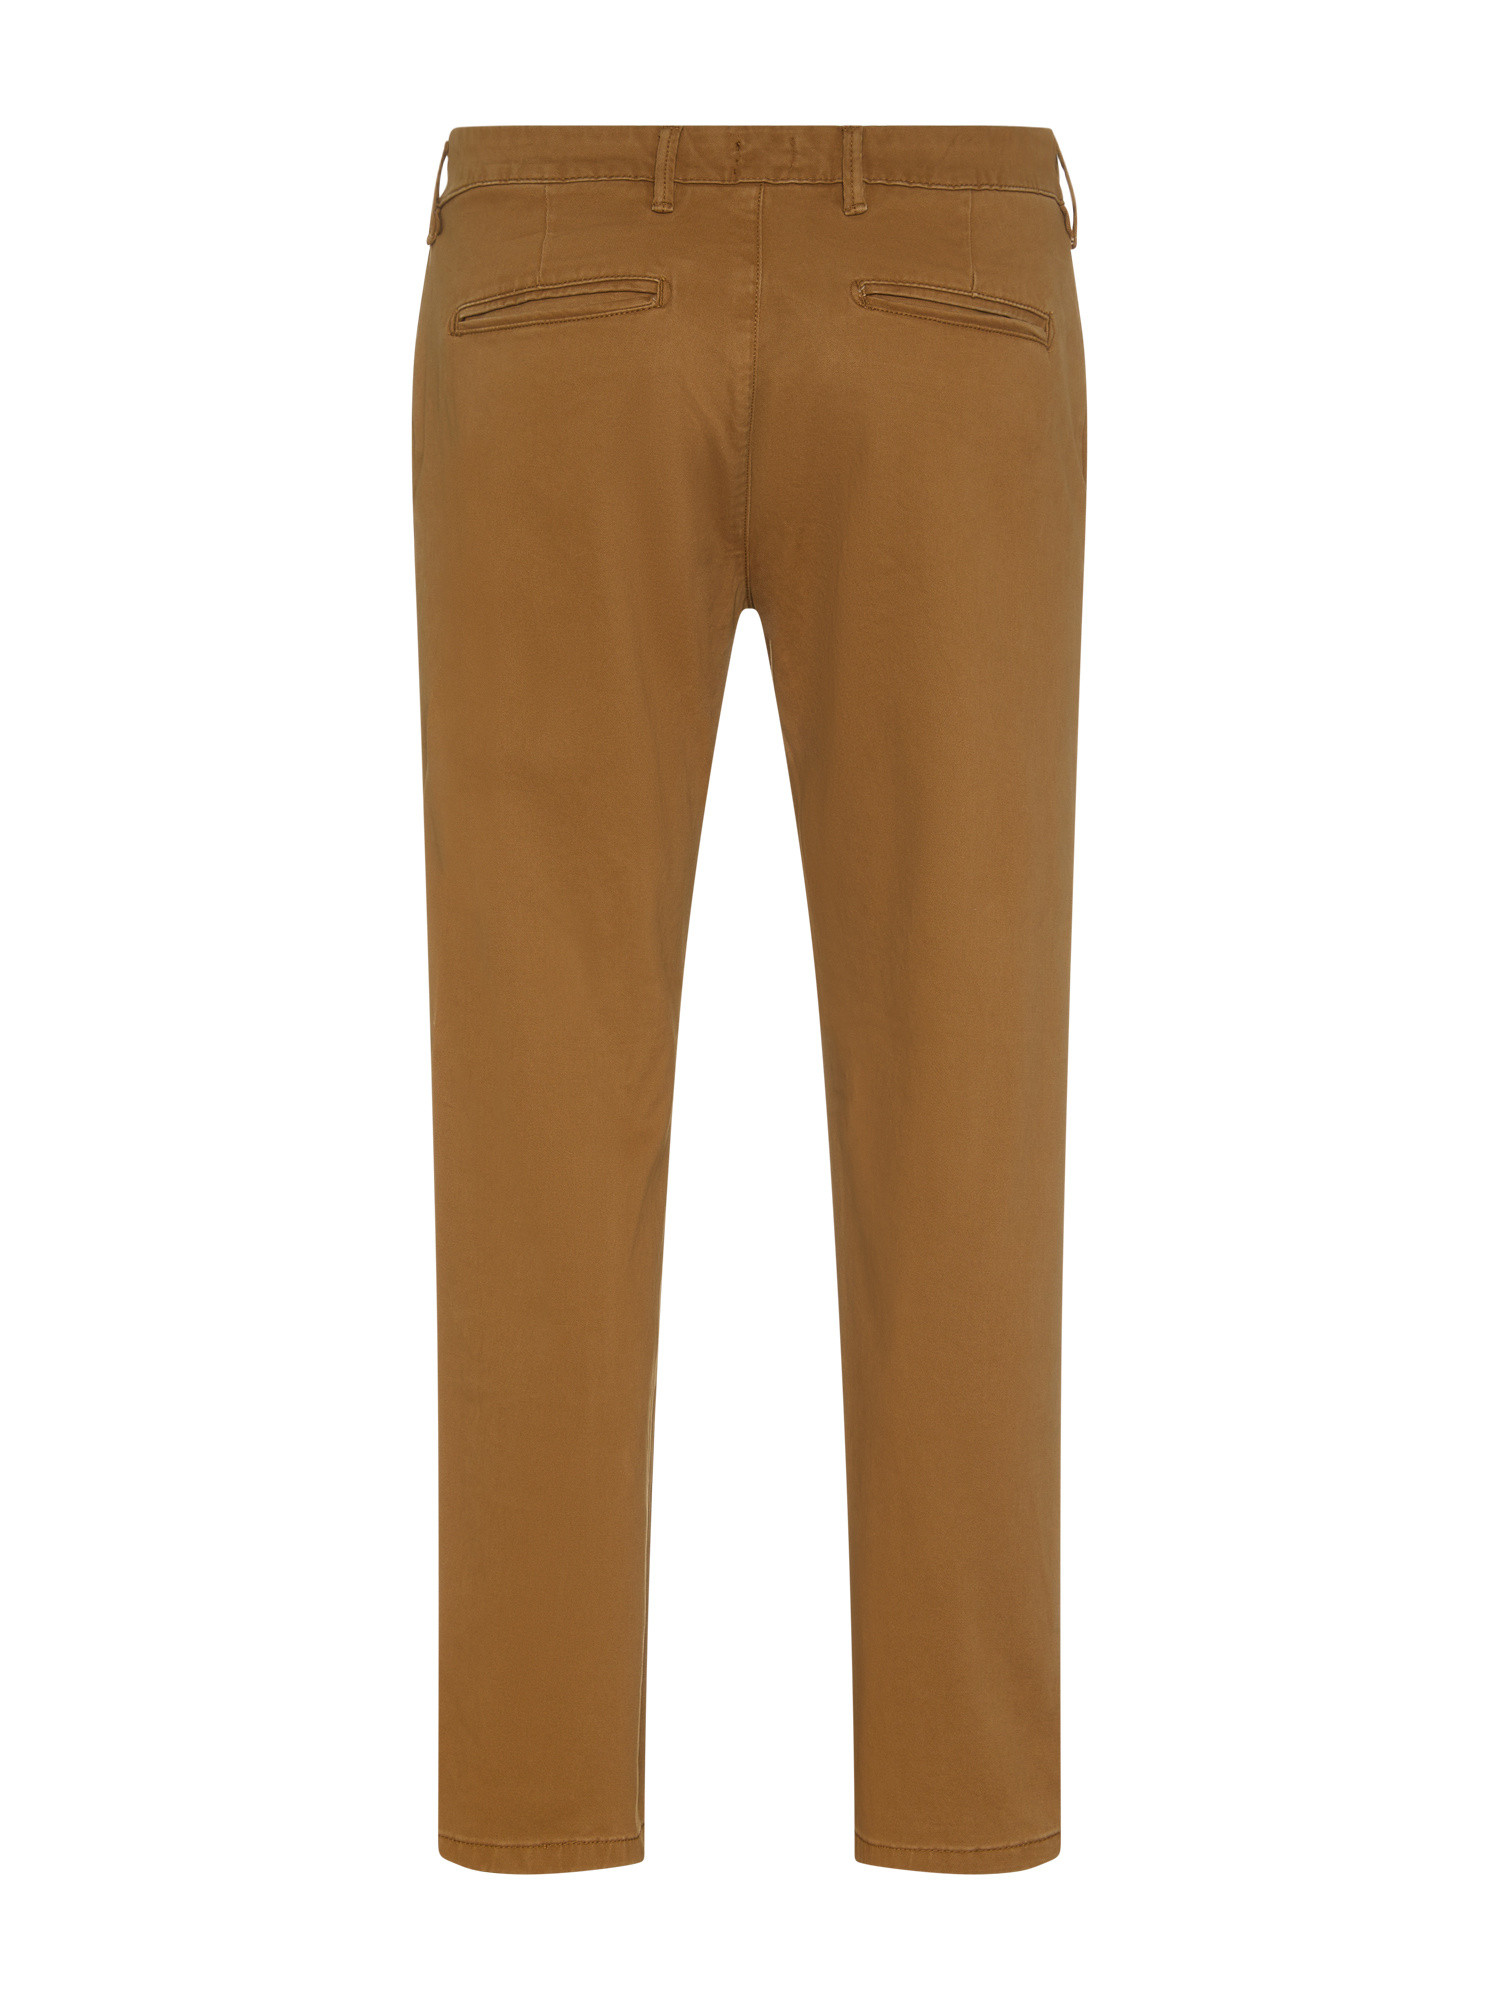 JCT - Chino trousers, Dark Yellow, large image number 1